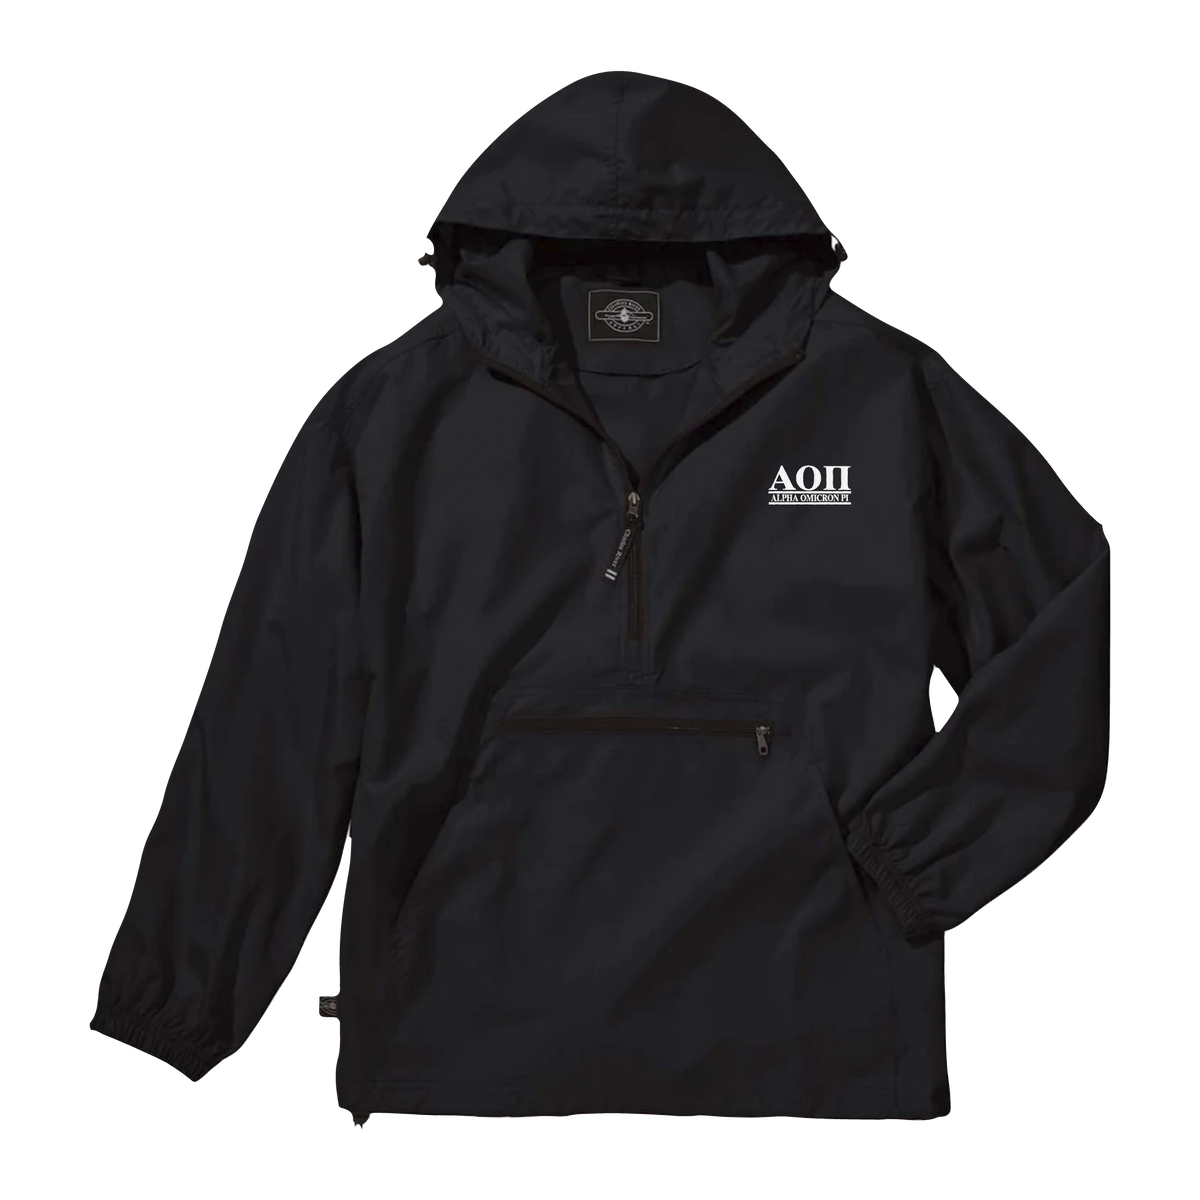 B-Unlimited Greek - Rain Jacket (AOII) - Charles River - 9905 - Solid Rain Jacket Pullover - Black